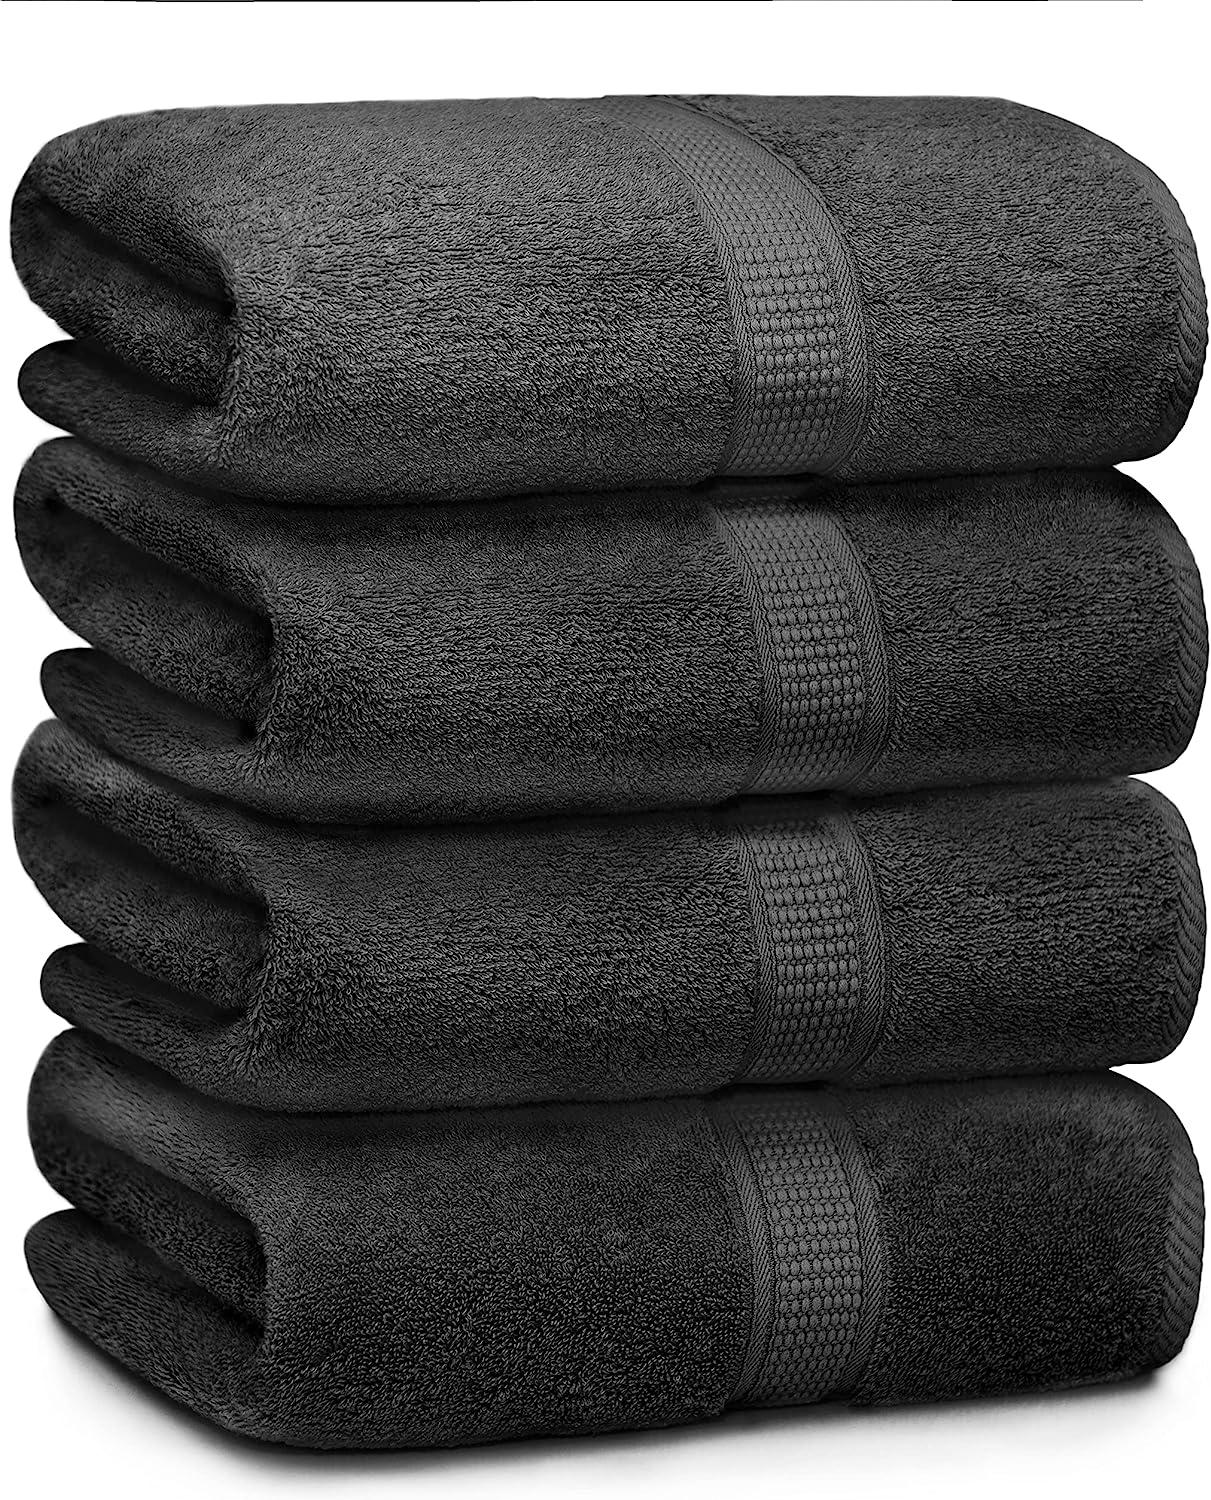 Ariv Towels - Bath Towels Set - Premium Bamboo Cotton Bath Towels - Ultra  Absorbent, Soft Feel, Large and Quick Drying 30 X 52 (Grey) - Towel Set  of 4